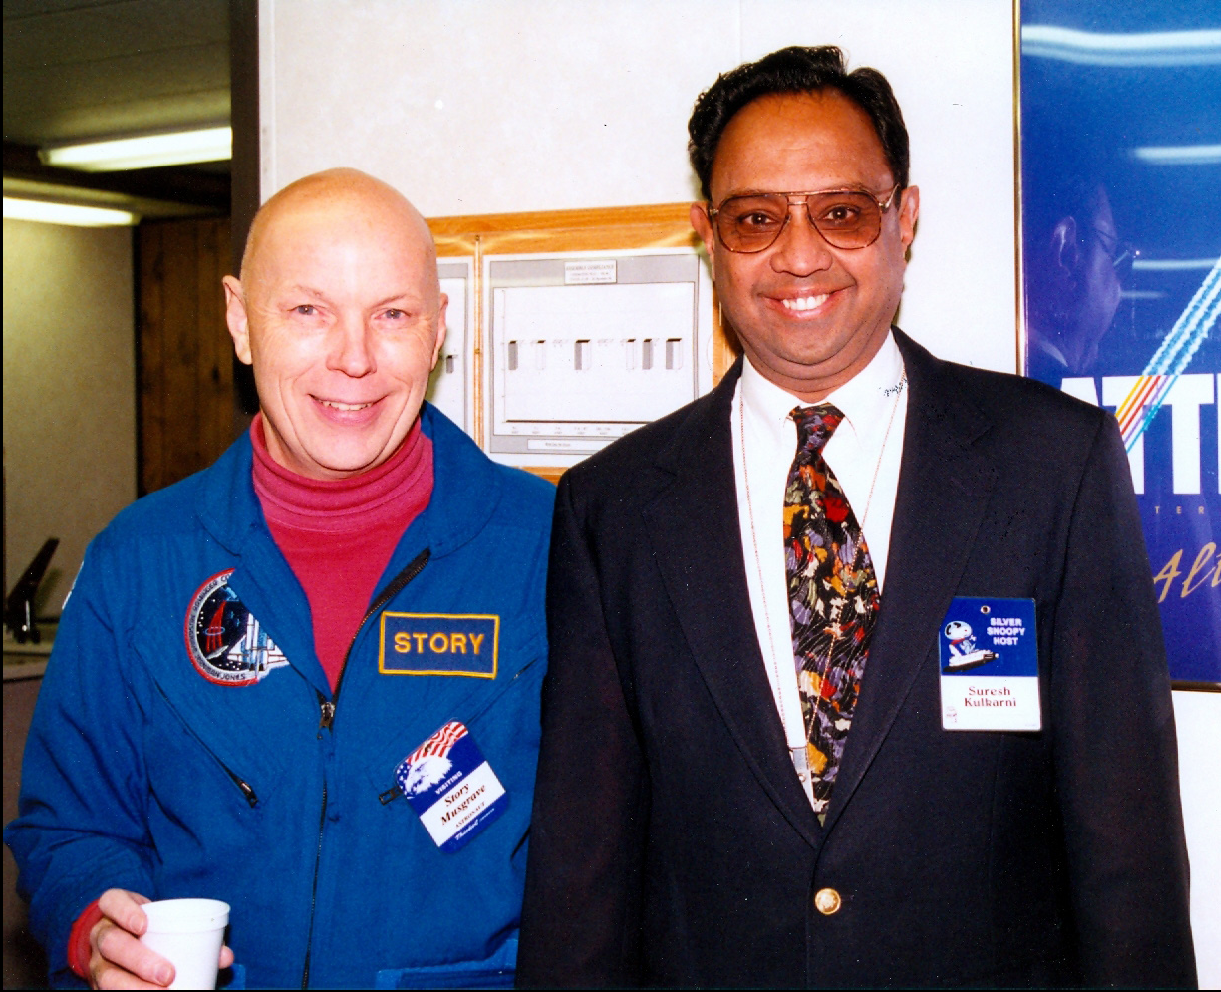 Astronaut Musgrave and Dr. Suresh Kulkarni